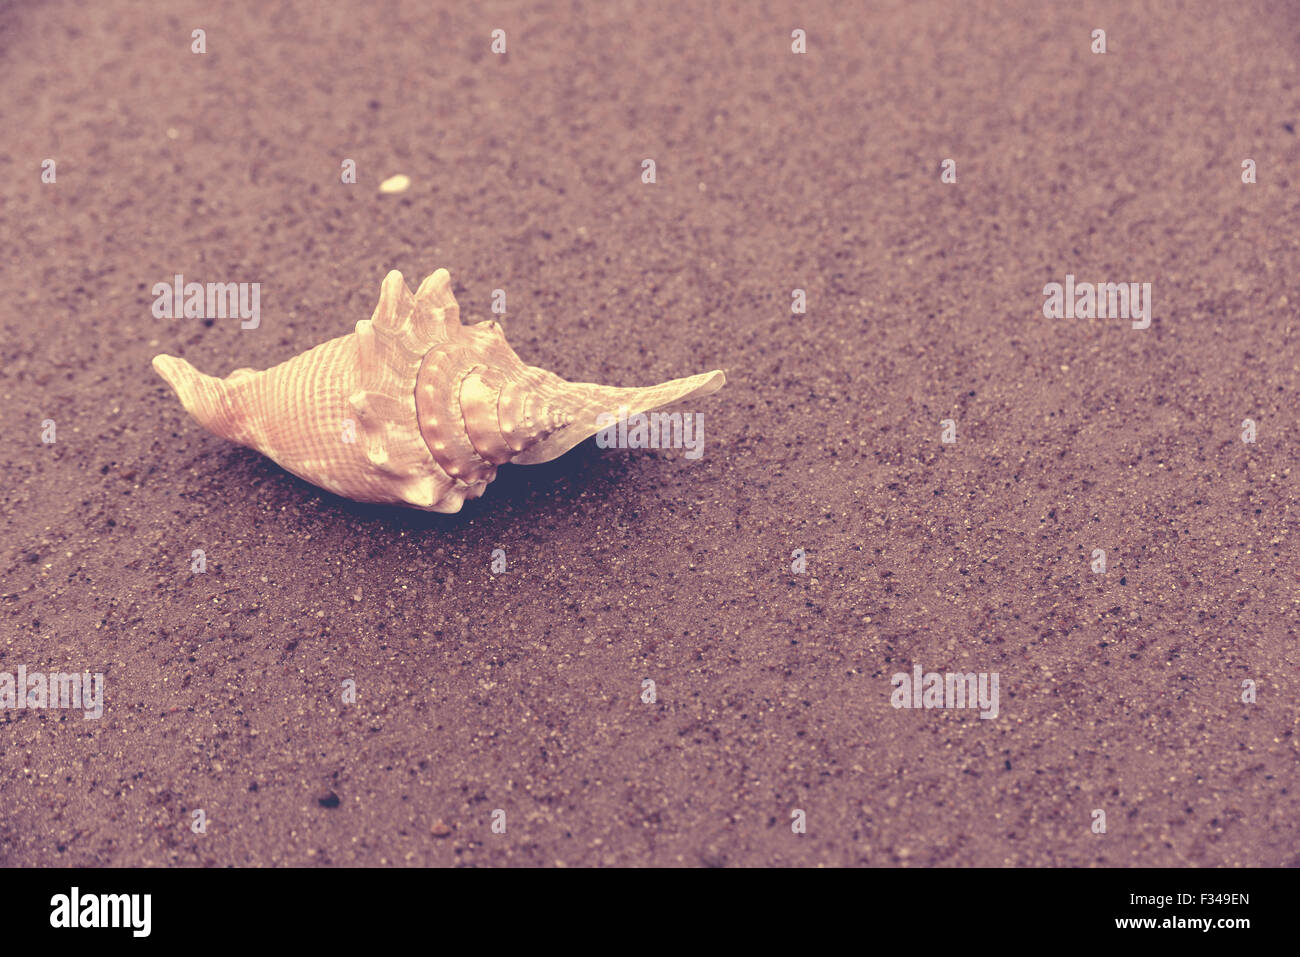 Seashell on wet sand closeup, vintage style filter effect. Stock Photo